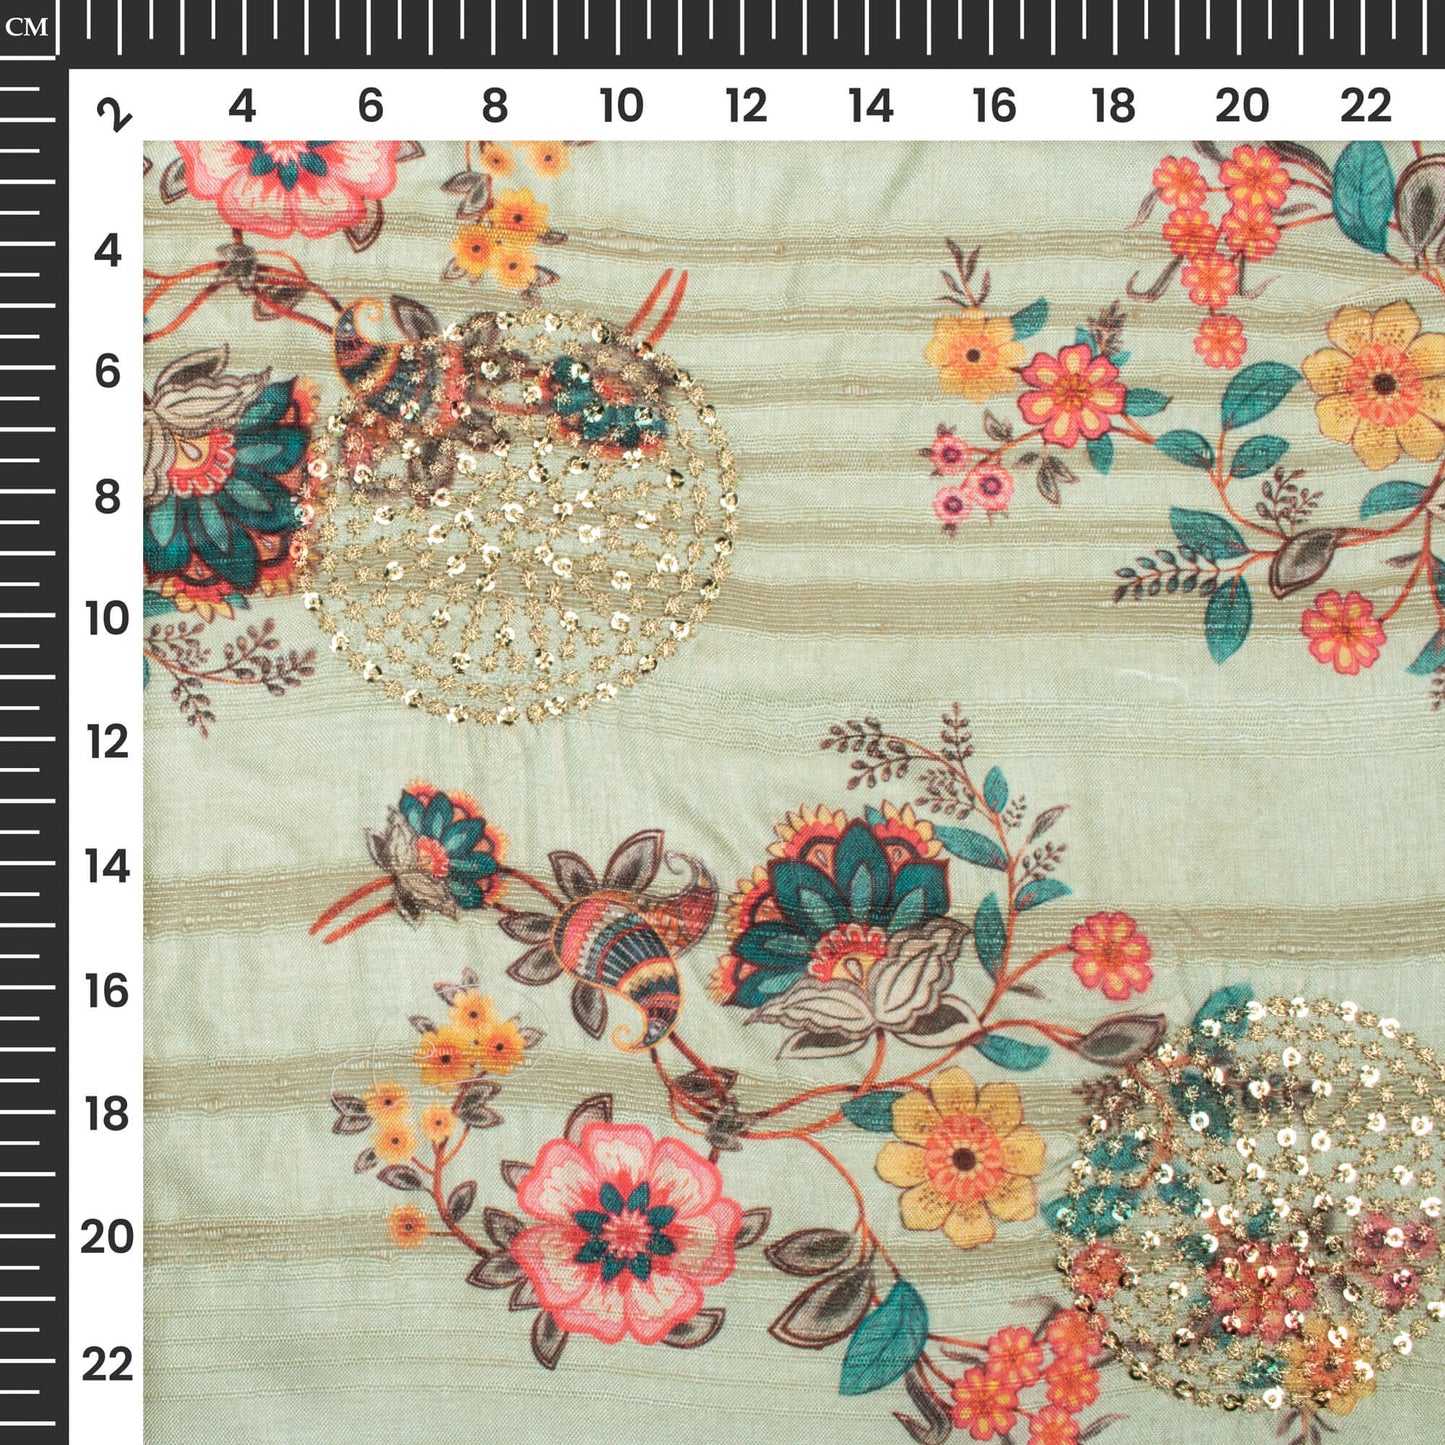 Stunning Floral Digital Print Butta Sequins Embroidery On Heritage Art Silk Fabric